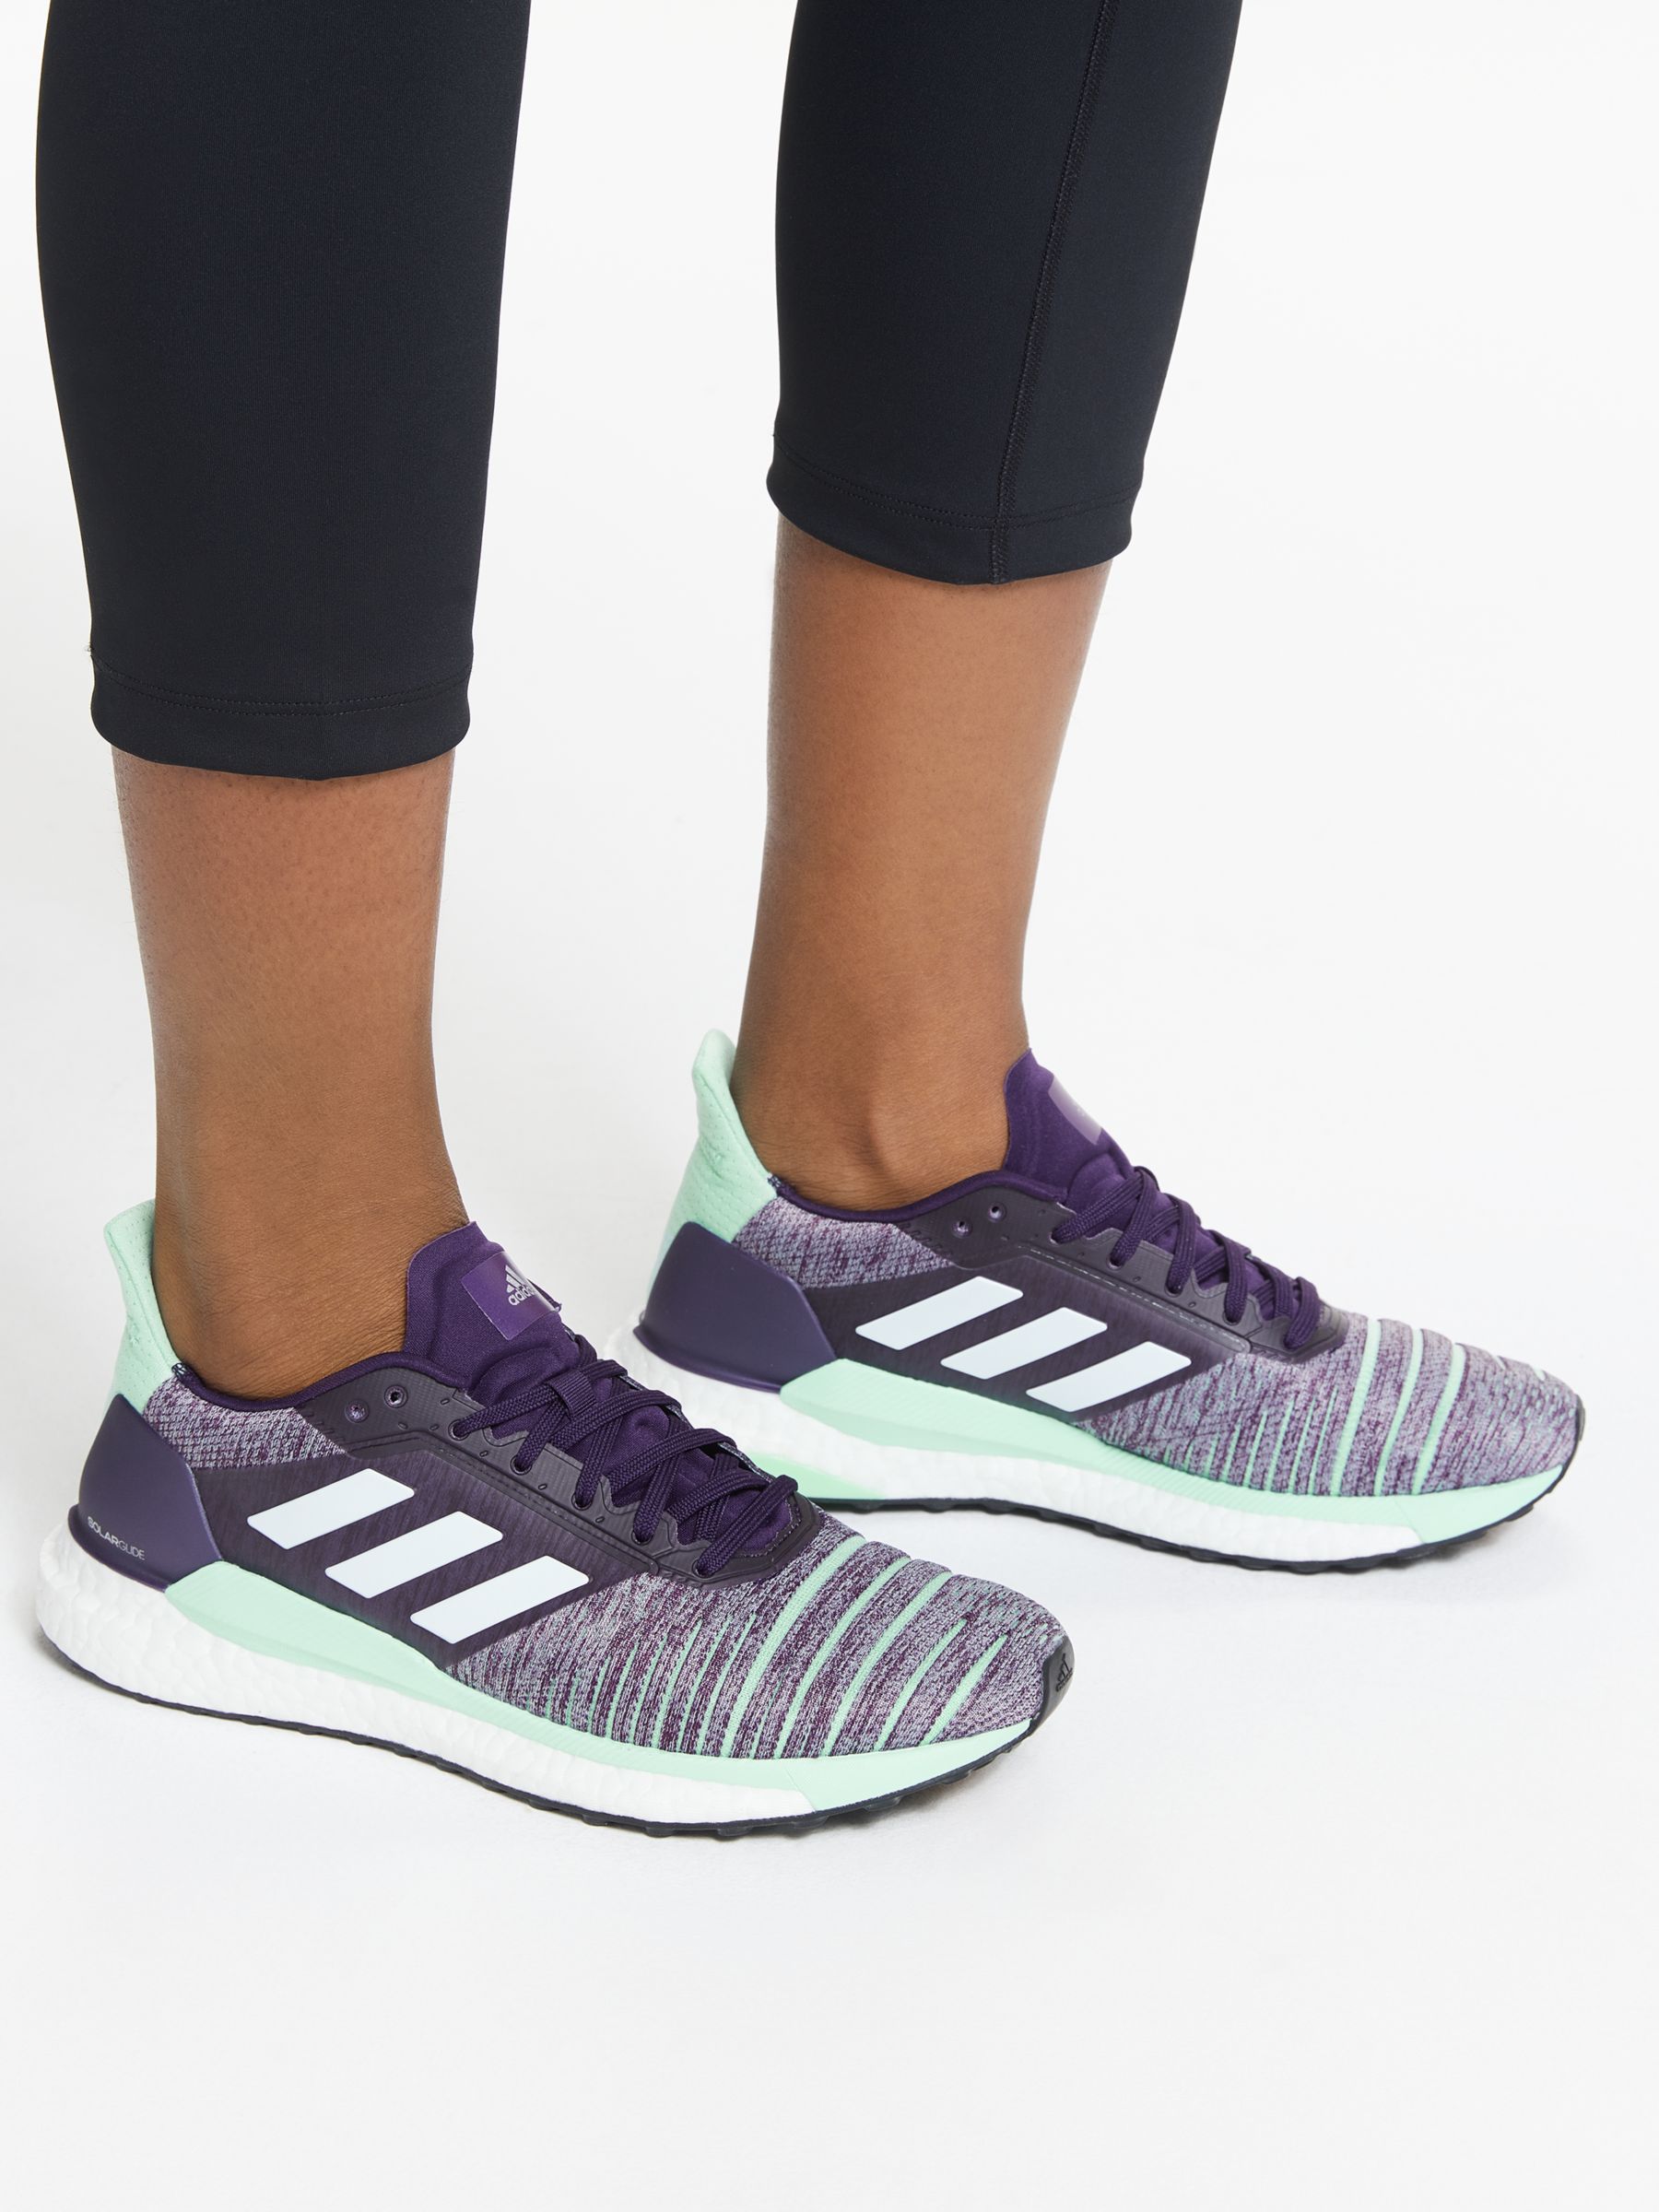 adidas women's solar glide running shoes